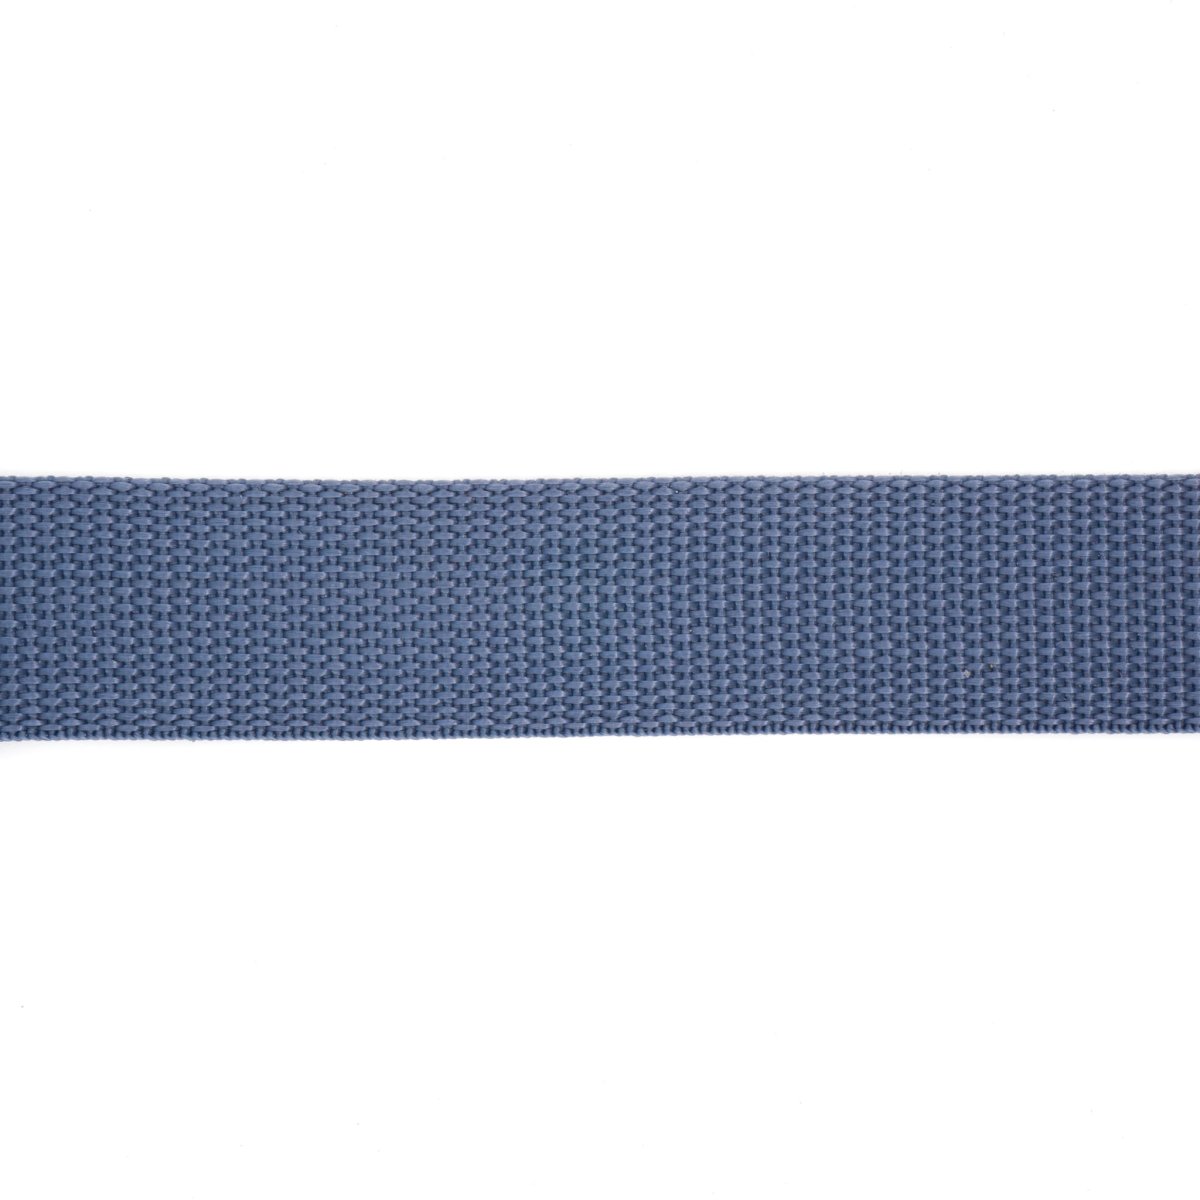 Tassenband | Nylon | 30 mm - grijs blauw Tassenband TASSENBAND-NYLON-30-GRIJS BLAUW